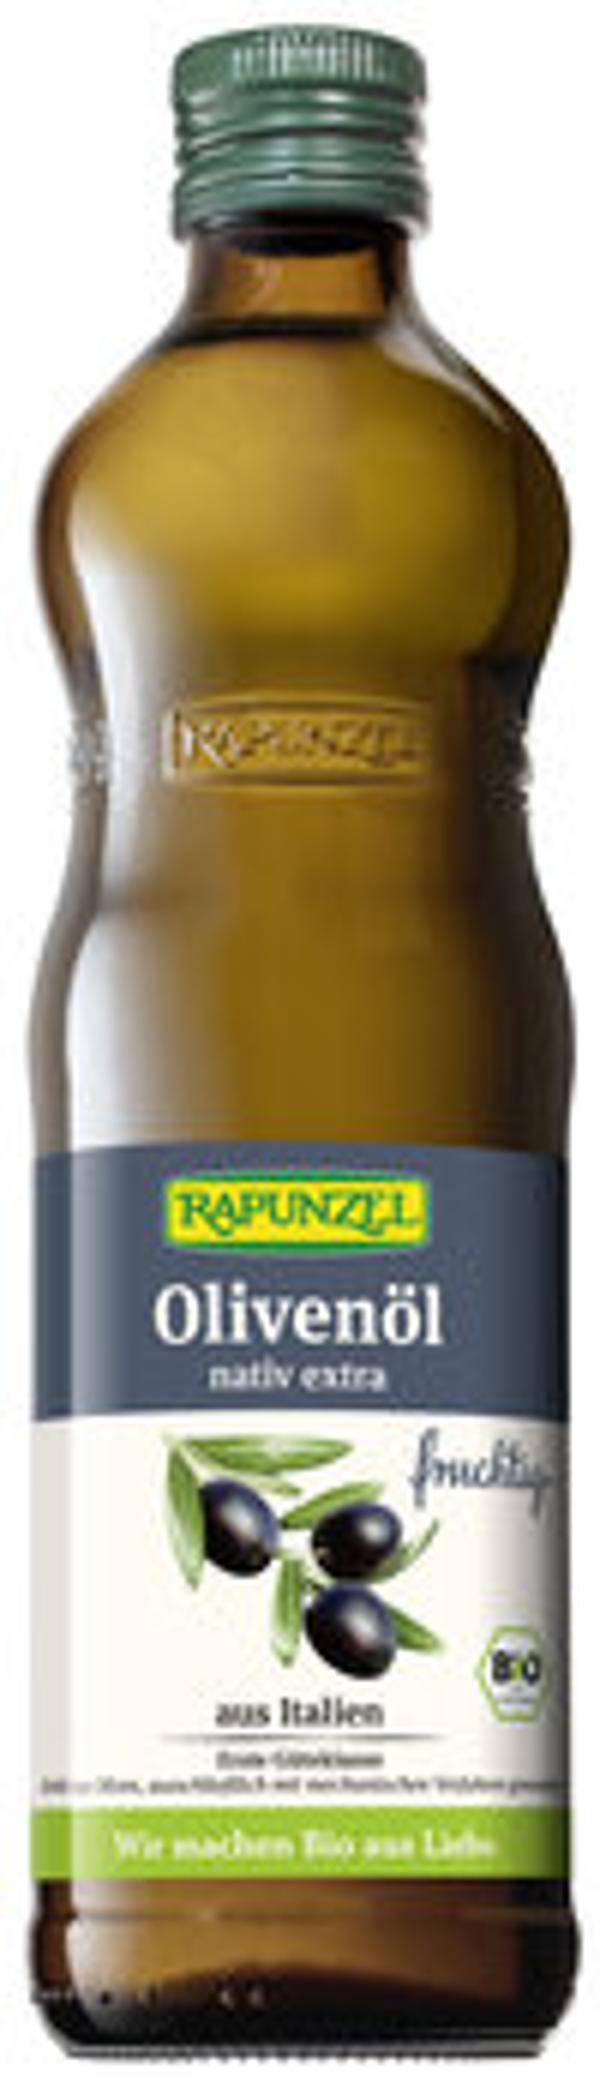 Produktfoto zu Olivenöl fruchtig nativ extra 0,5l Rapunzel